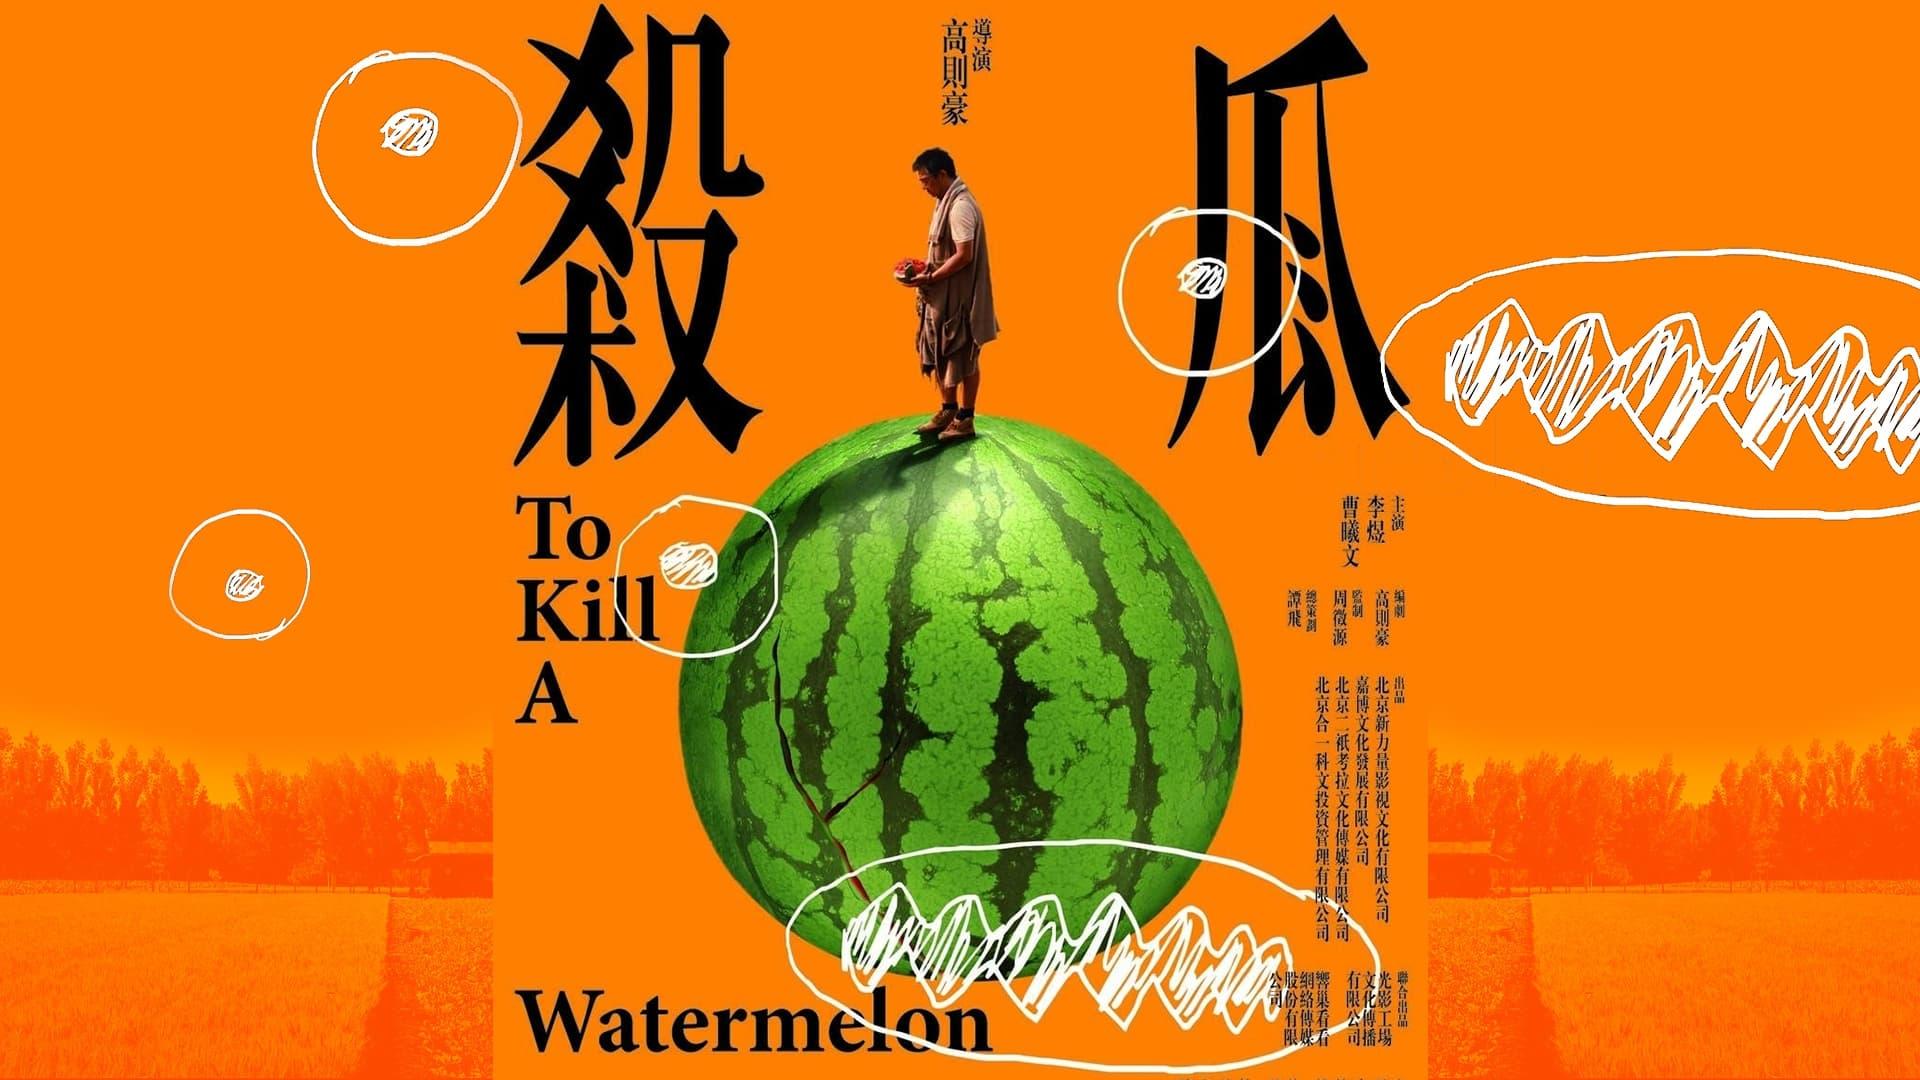 To Kill a Watermelon backdrop